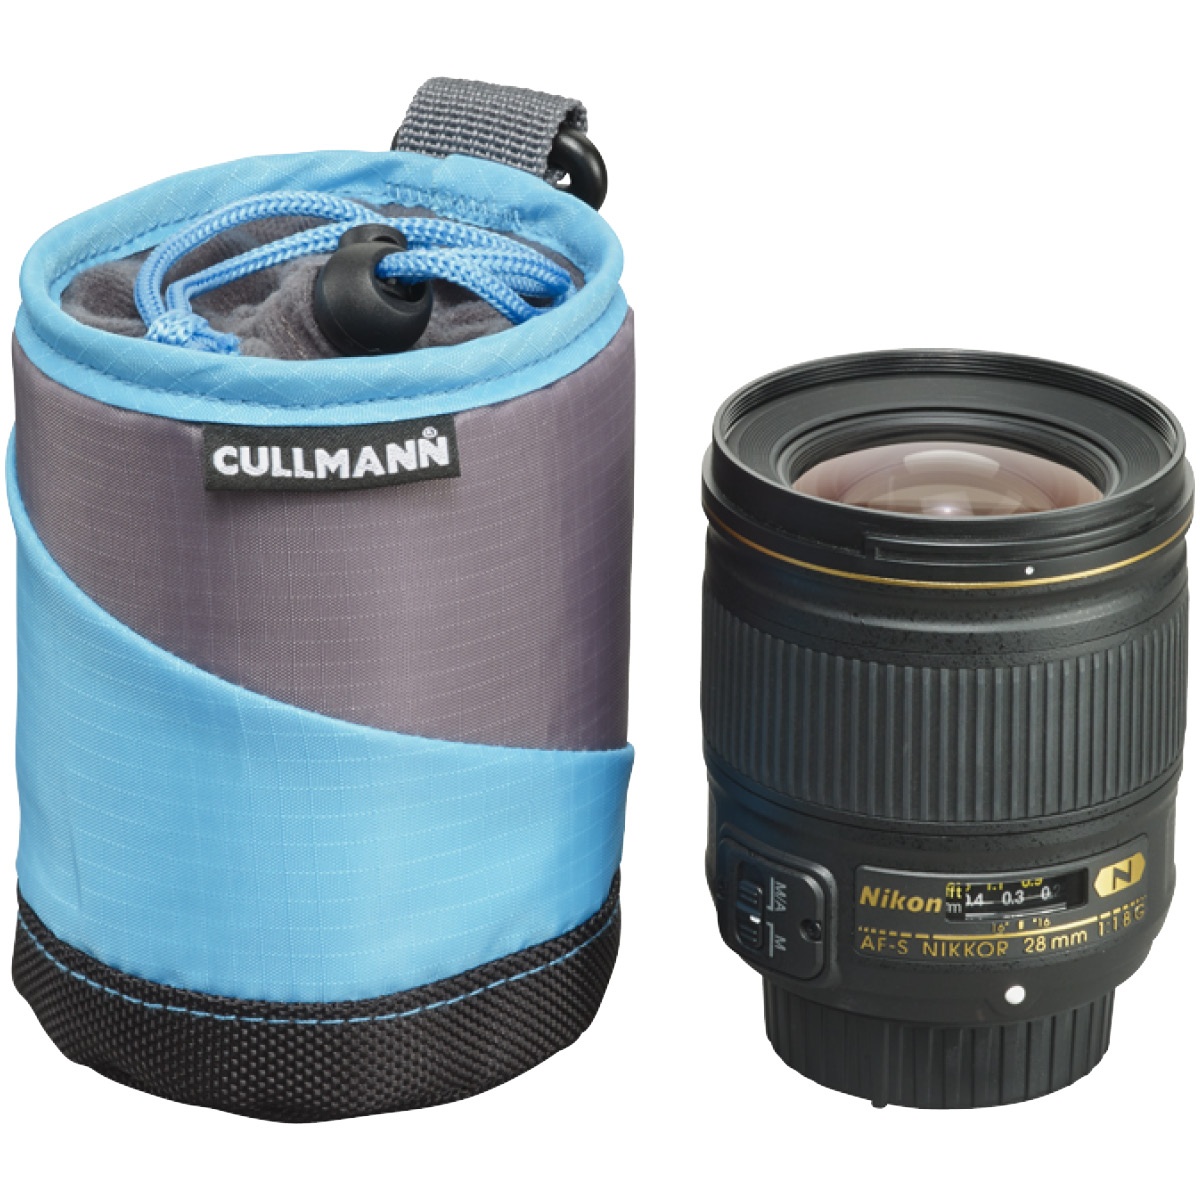 Cullmann Lens Container Small